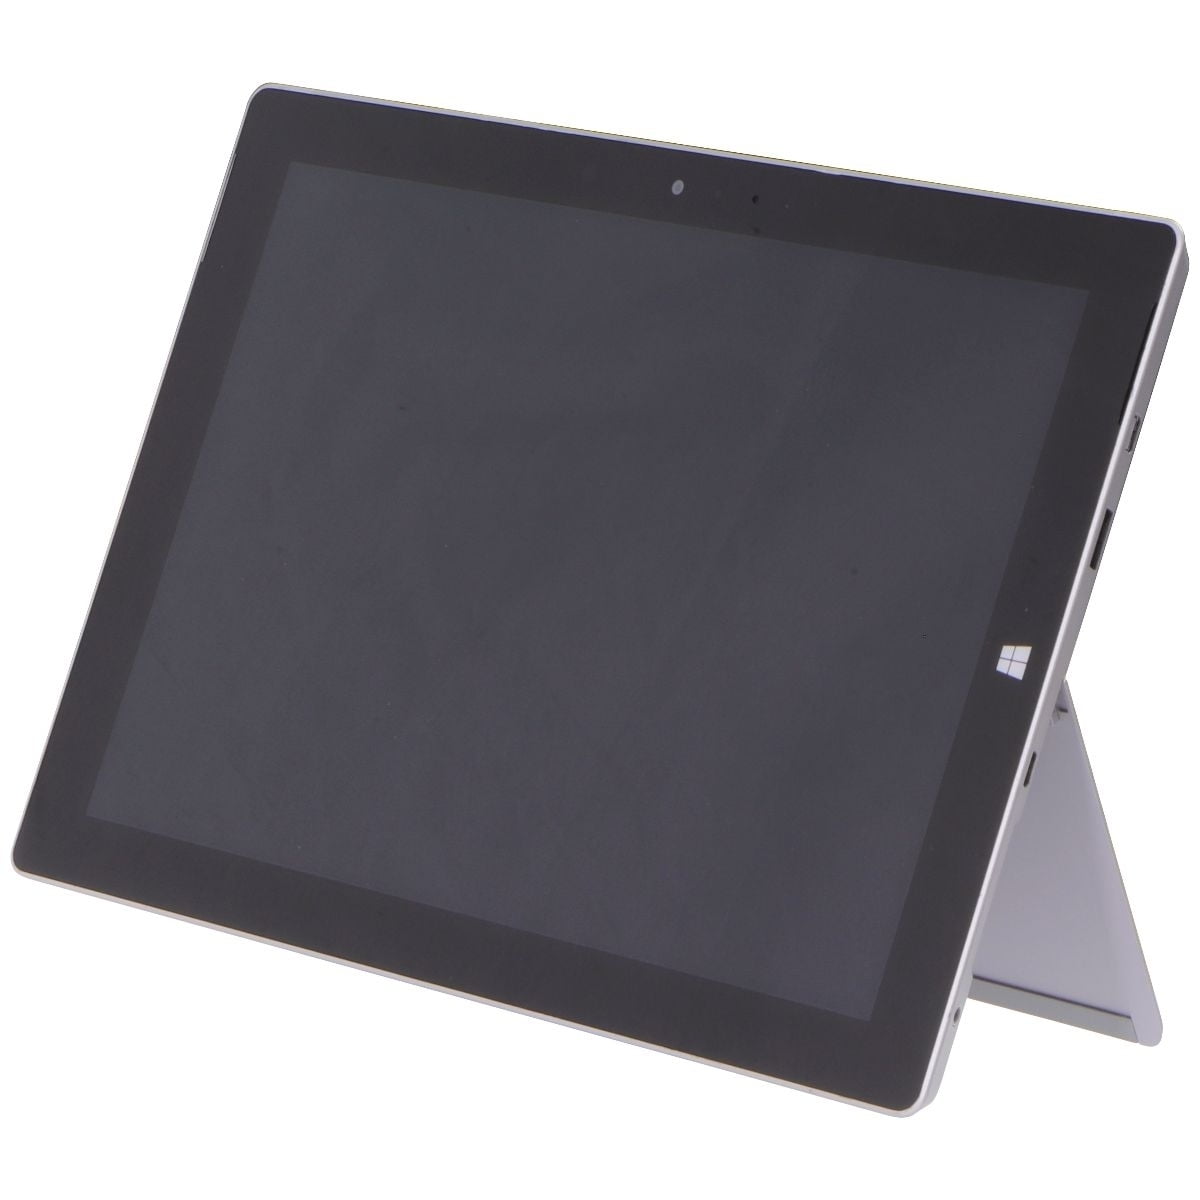 Microsoft Surface 3 (10.8-in) 1657 (Wifi + LTE) Intel x7-Z8700 